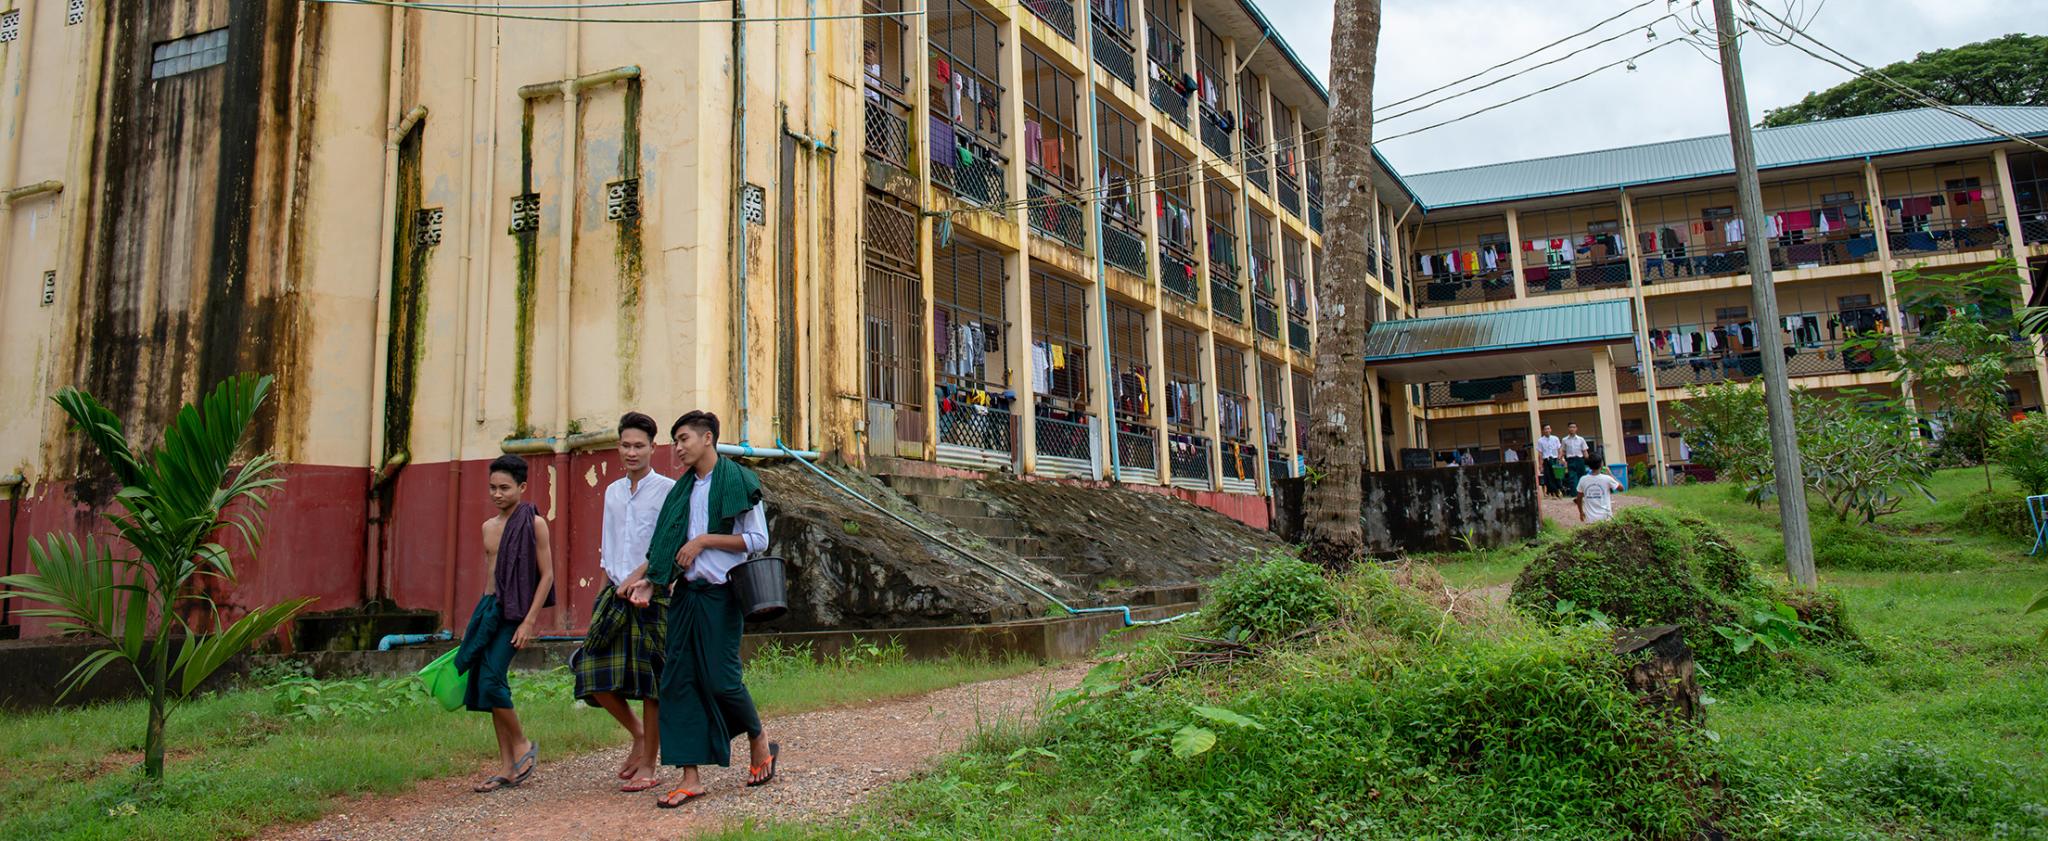 Building and yard in Myanmar